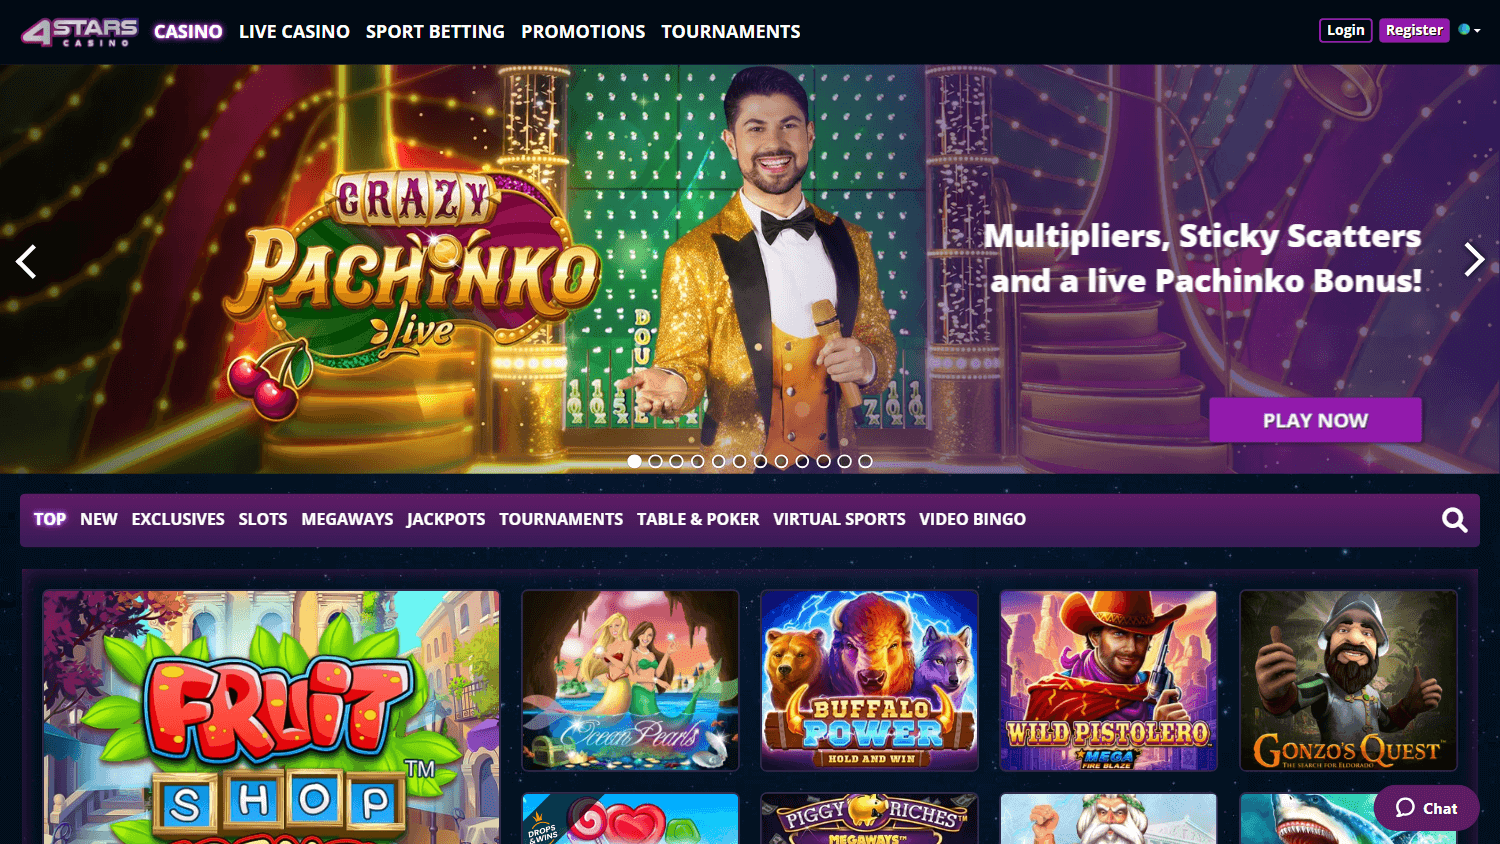 4stars_casino_homepage_desktop